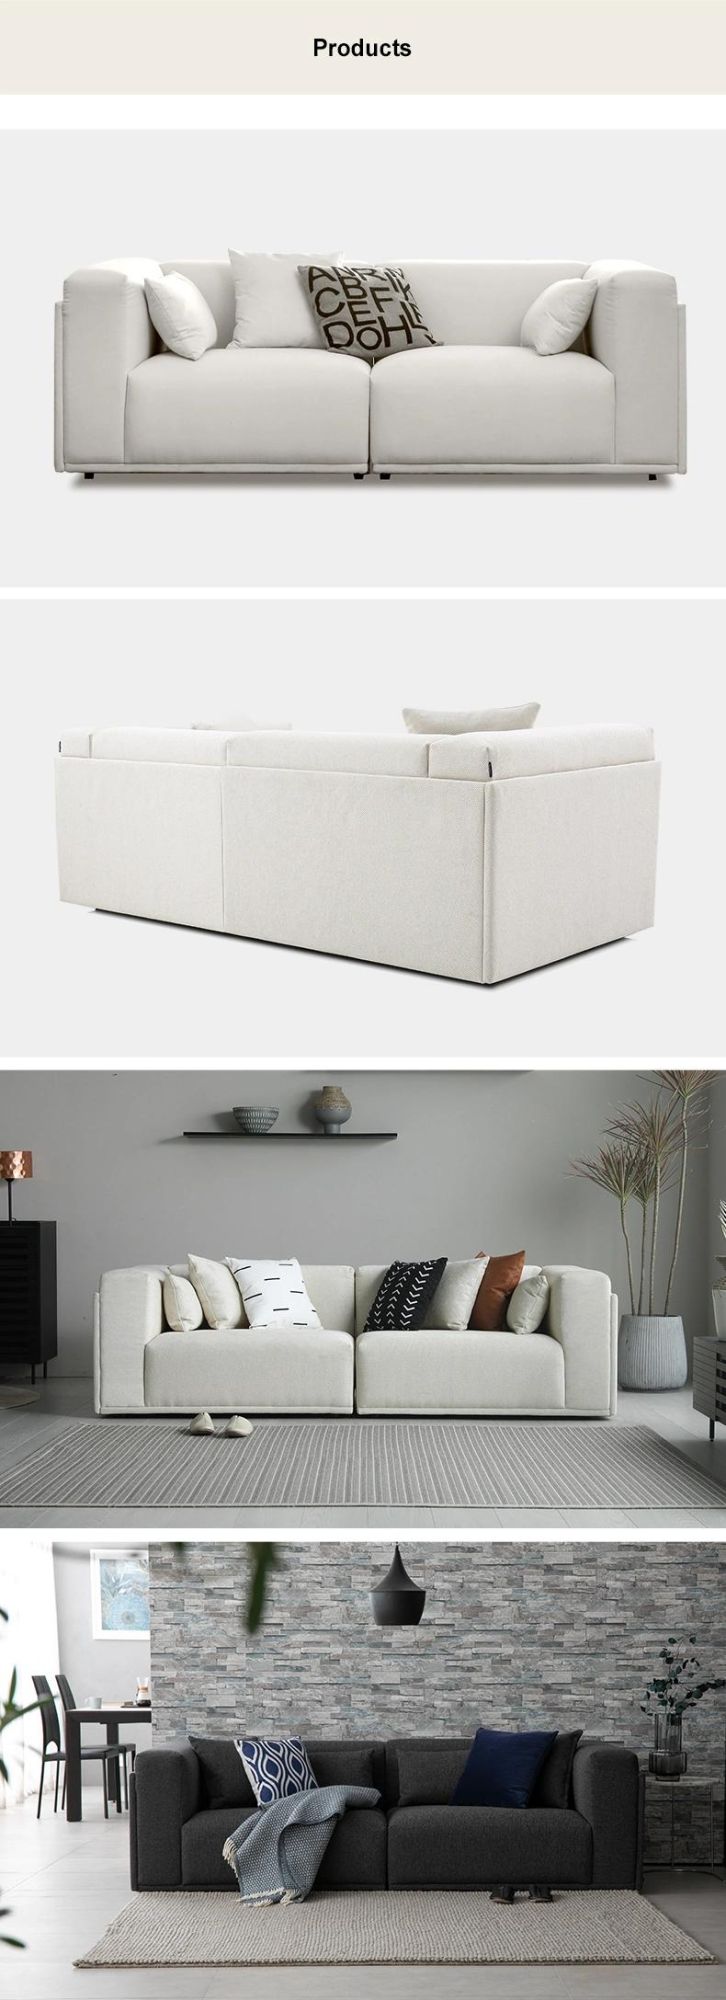 New Armonia Modern Carton 2630*980*700 mm China Living Room Home Furniture Sofa